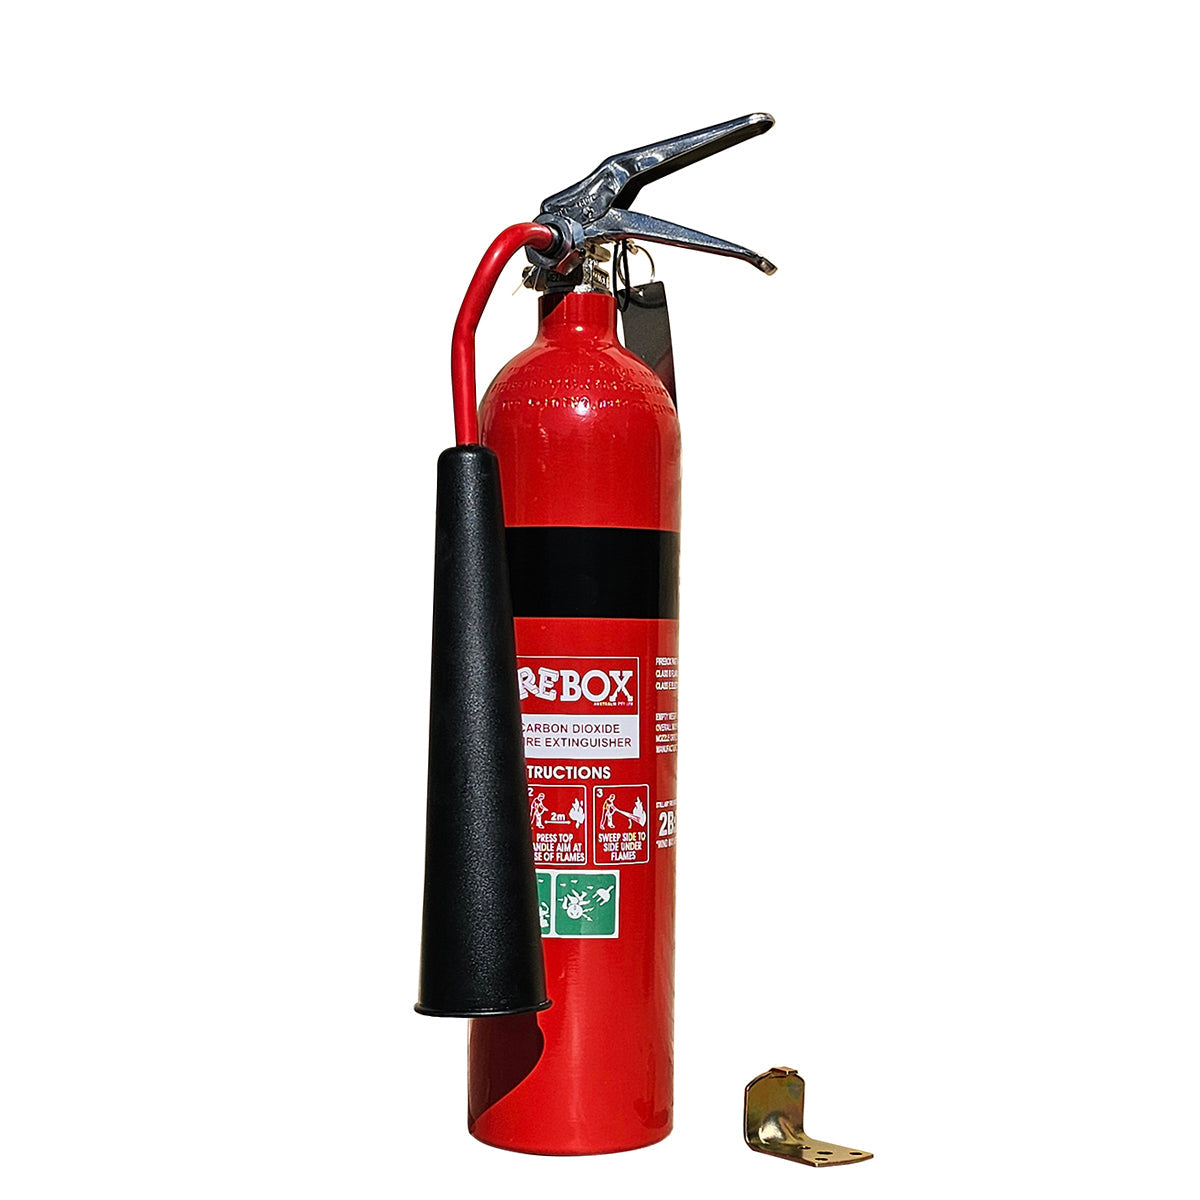 2kg CO2 Extinguisher - Premium CO2 Extinguishers from Firebox - Shop now at Firebox Australia